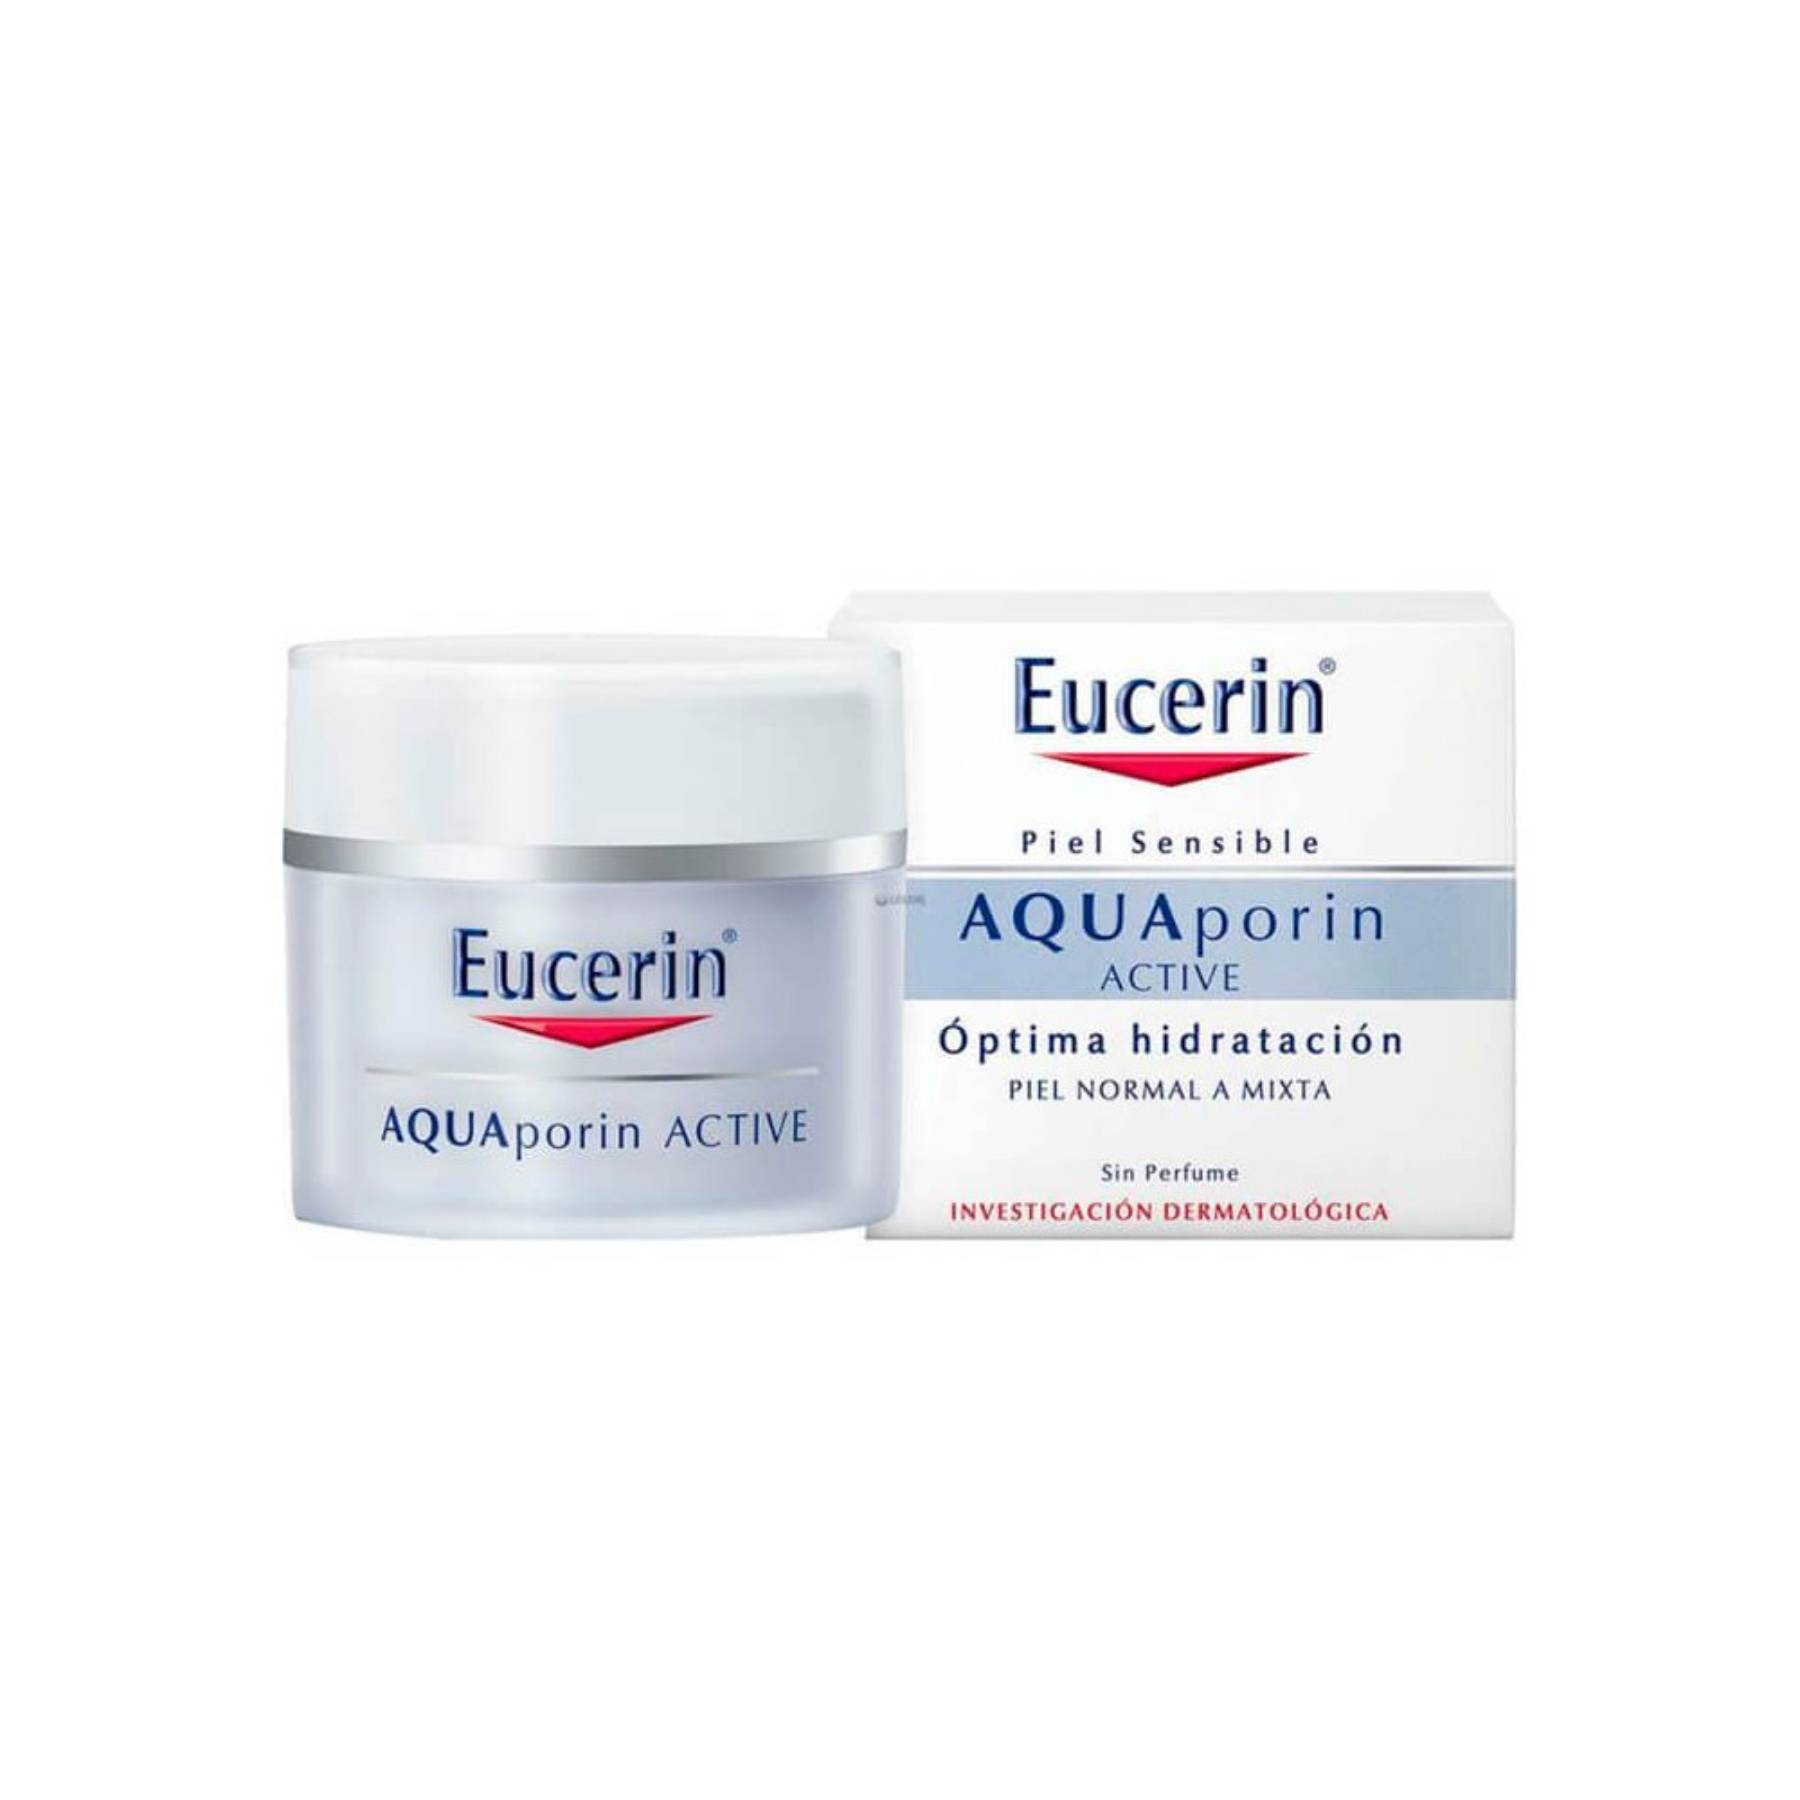 Eucerin Aquaporin Active / Eucerin